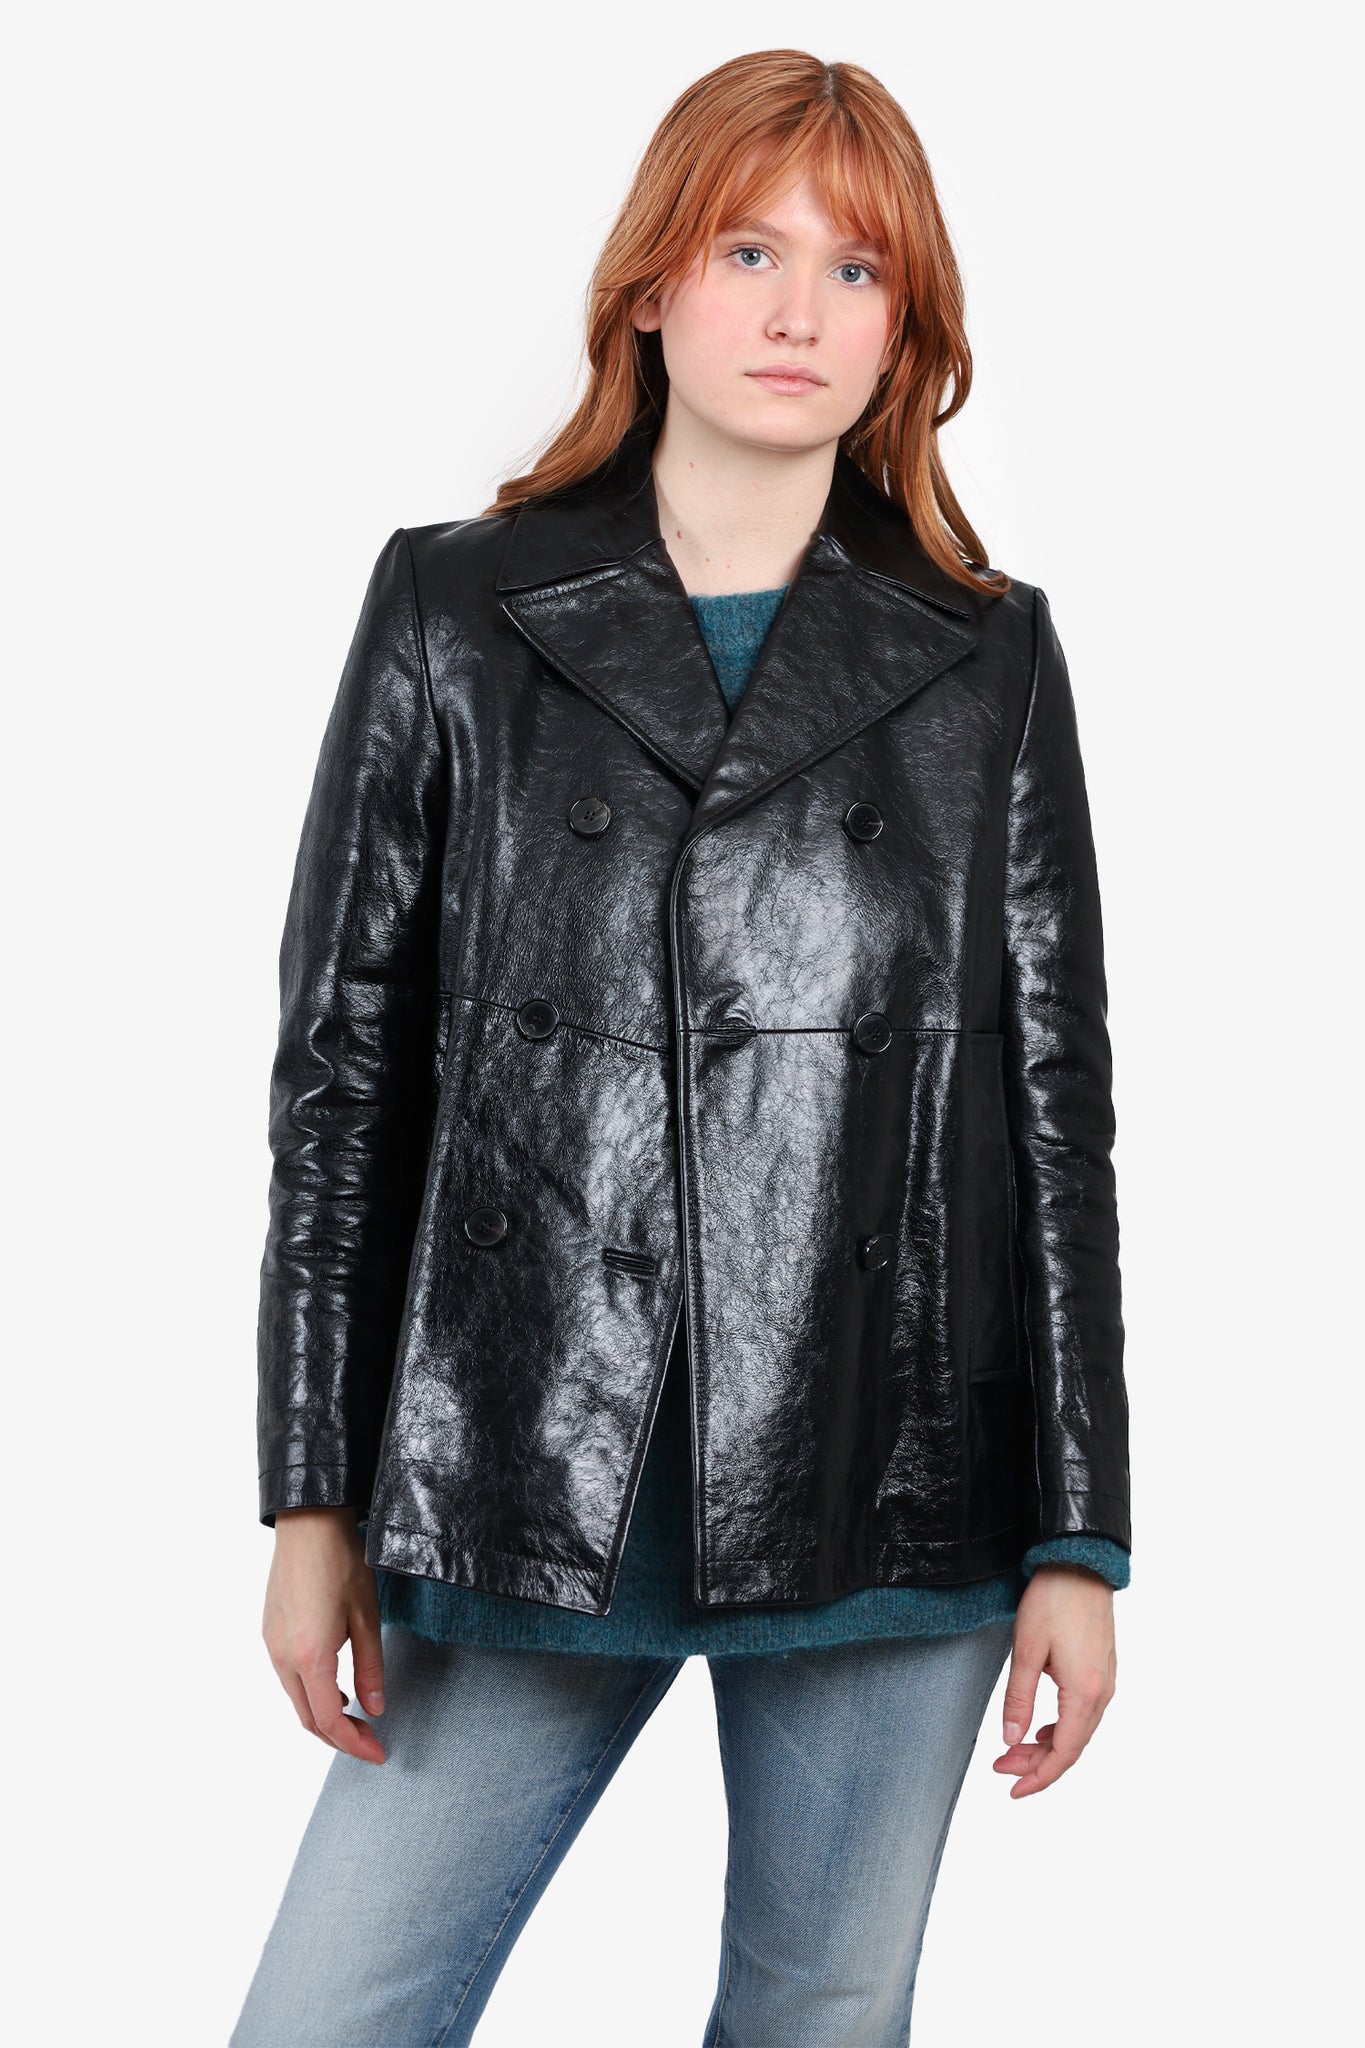 Valentino Black Leather Double Breasted Jacket Size 6